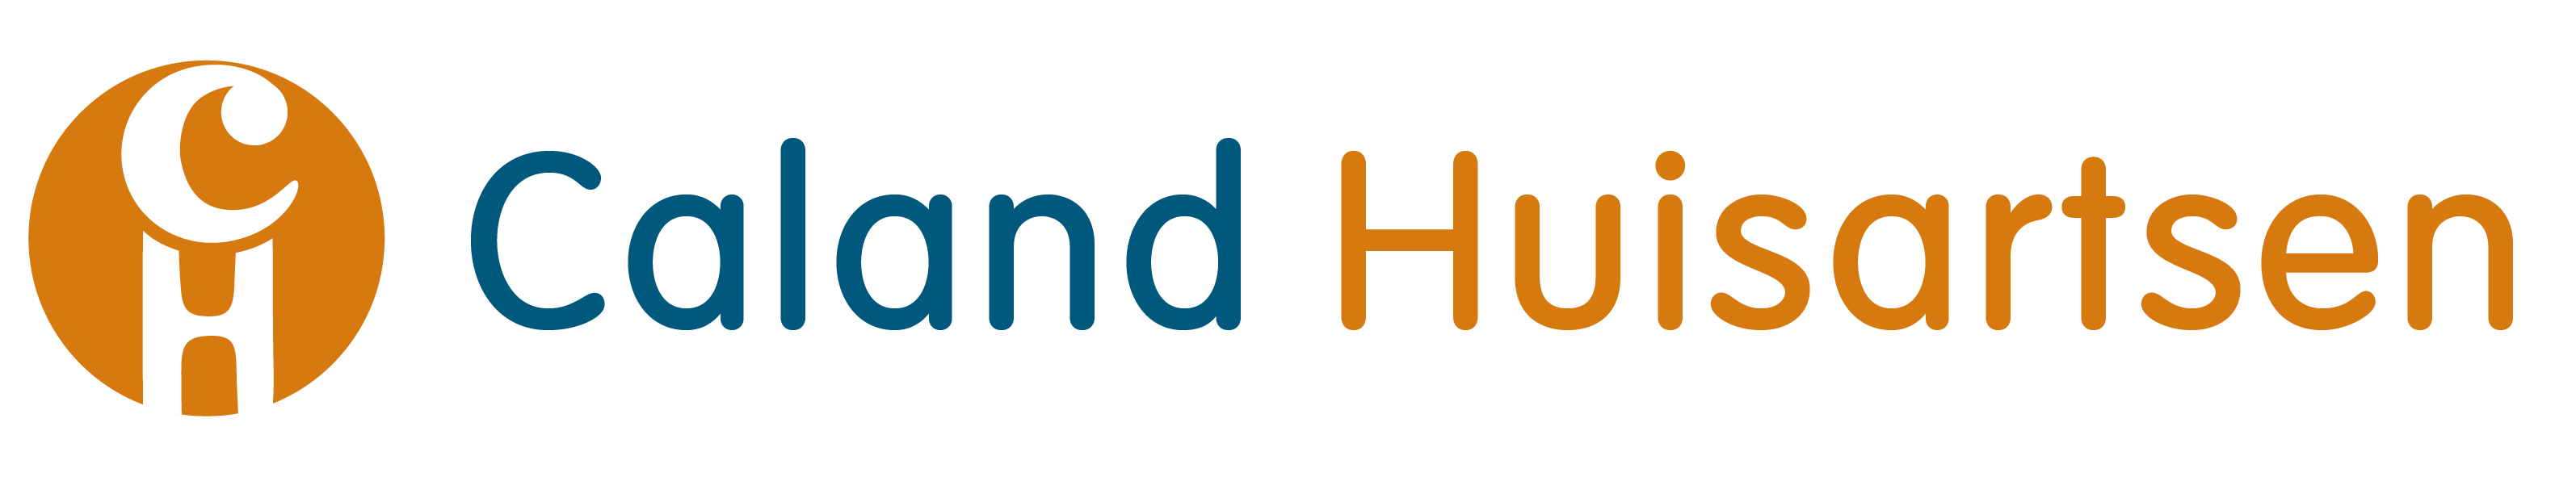 Caland Huisartsen Logo